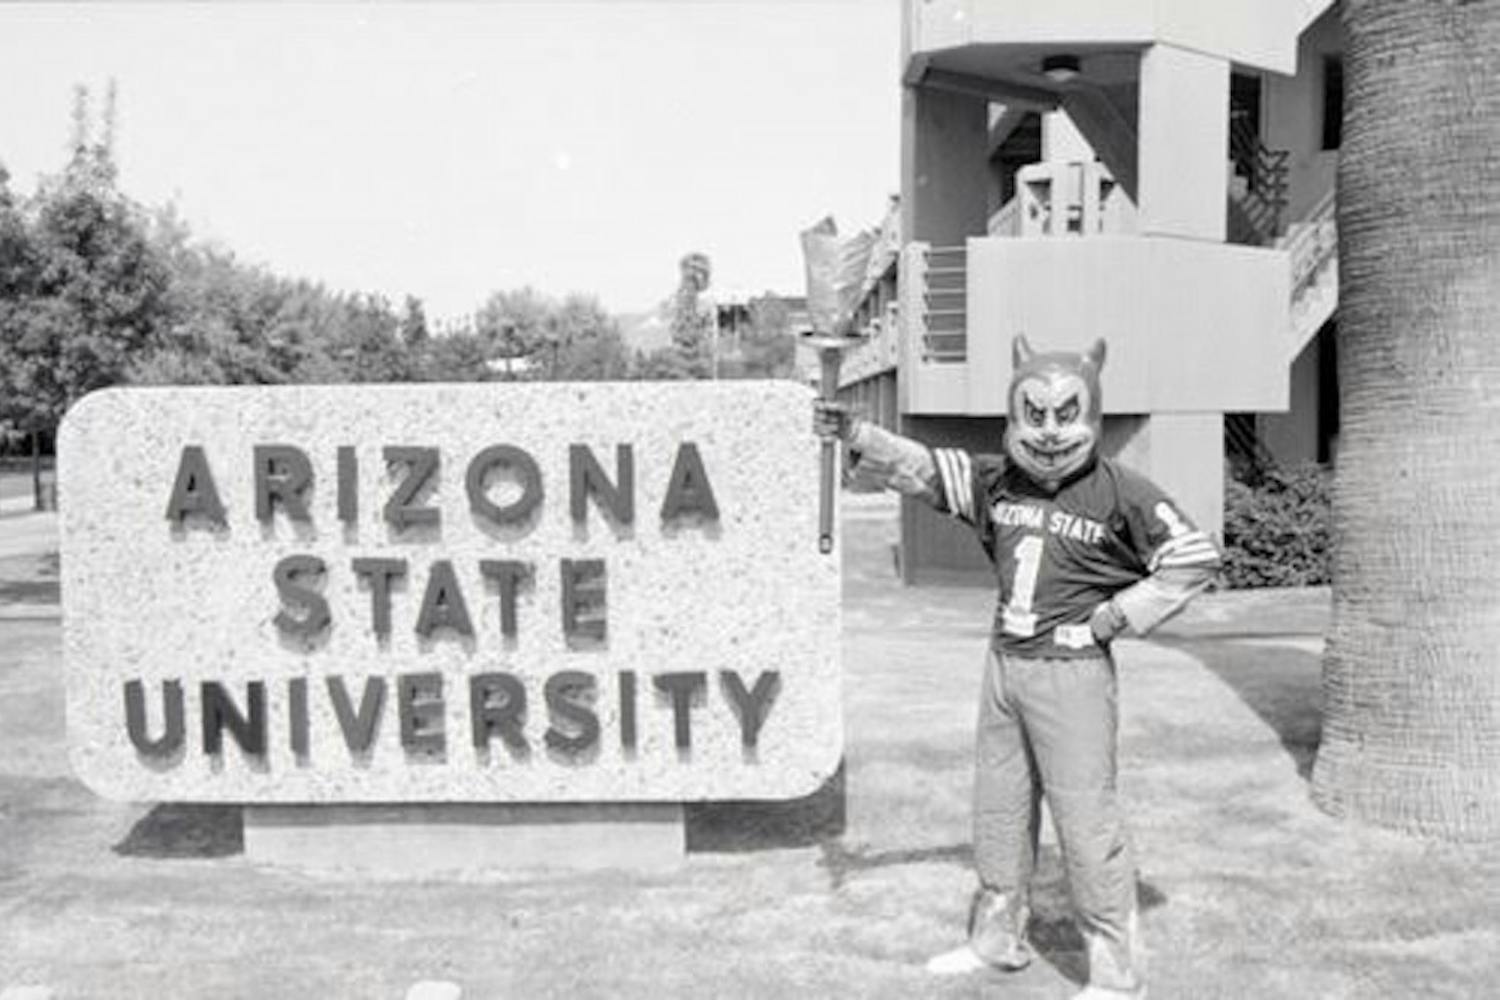 Sparky posing on ASU Campus between 1951-1953.